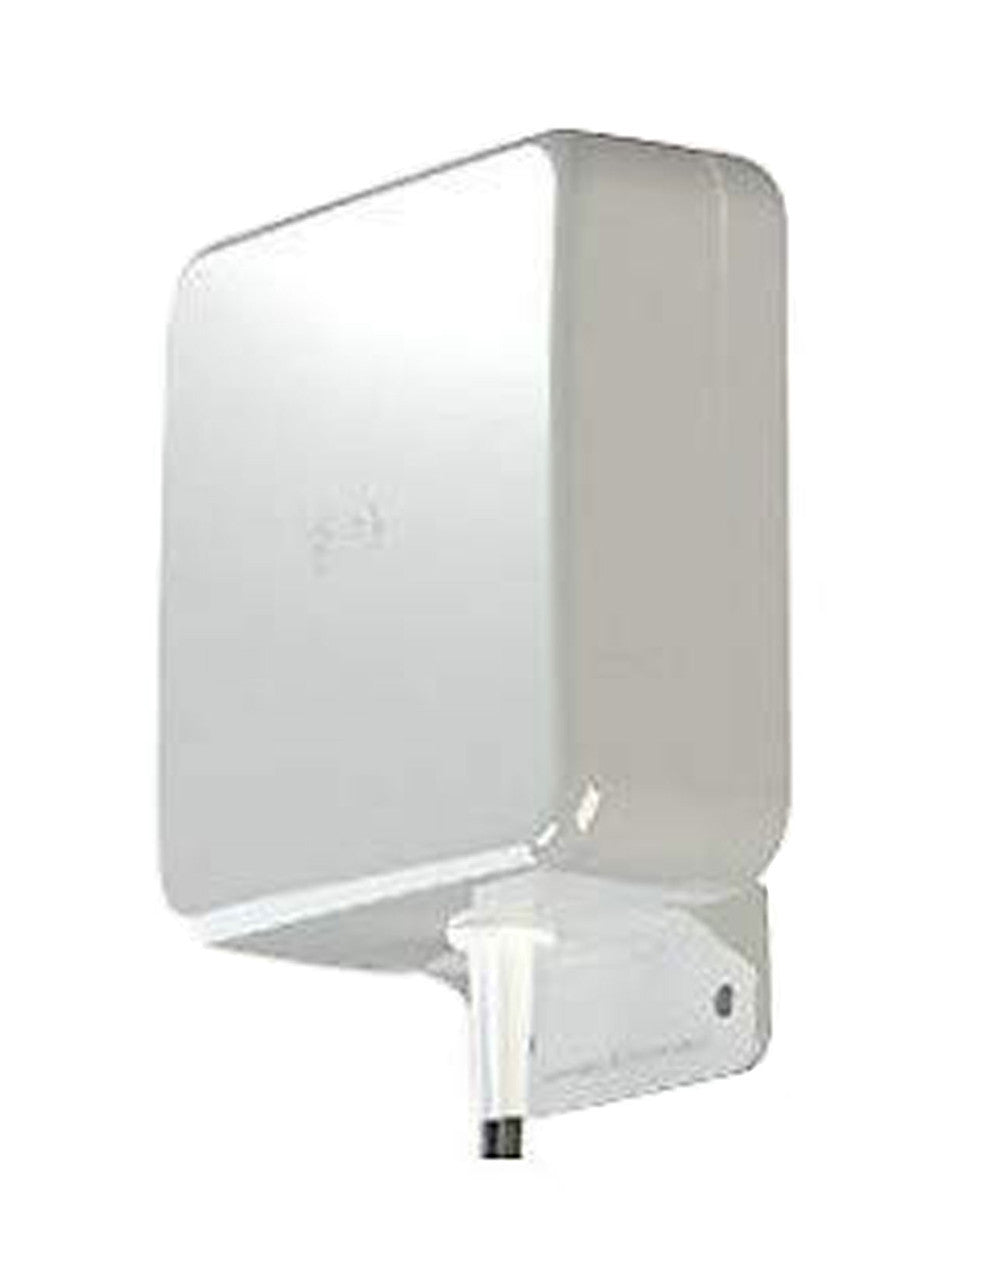 Sierra Wireless MIMO, antenne murale/poteau omnidirectionnelle, 698-2700MHZ (connecteurs femelles 0,3m - N) - 6001126